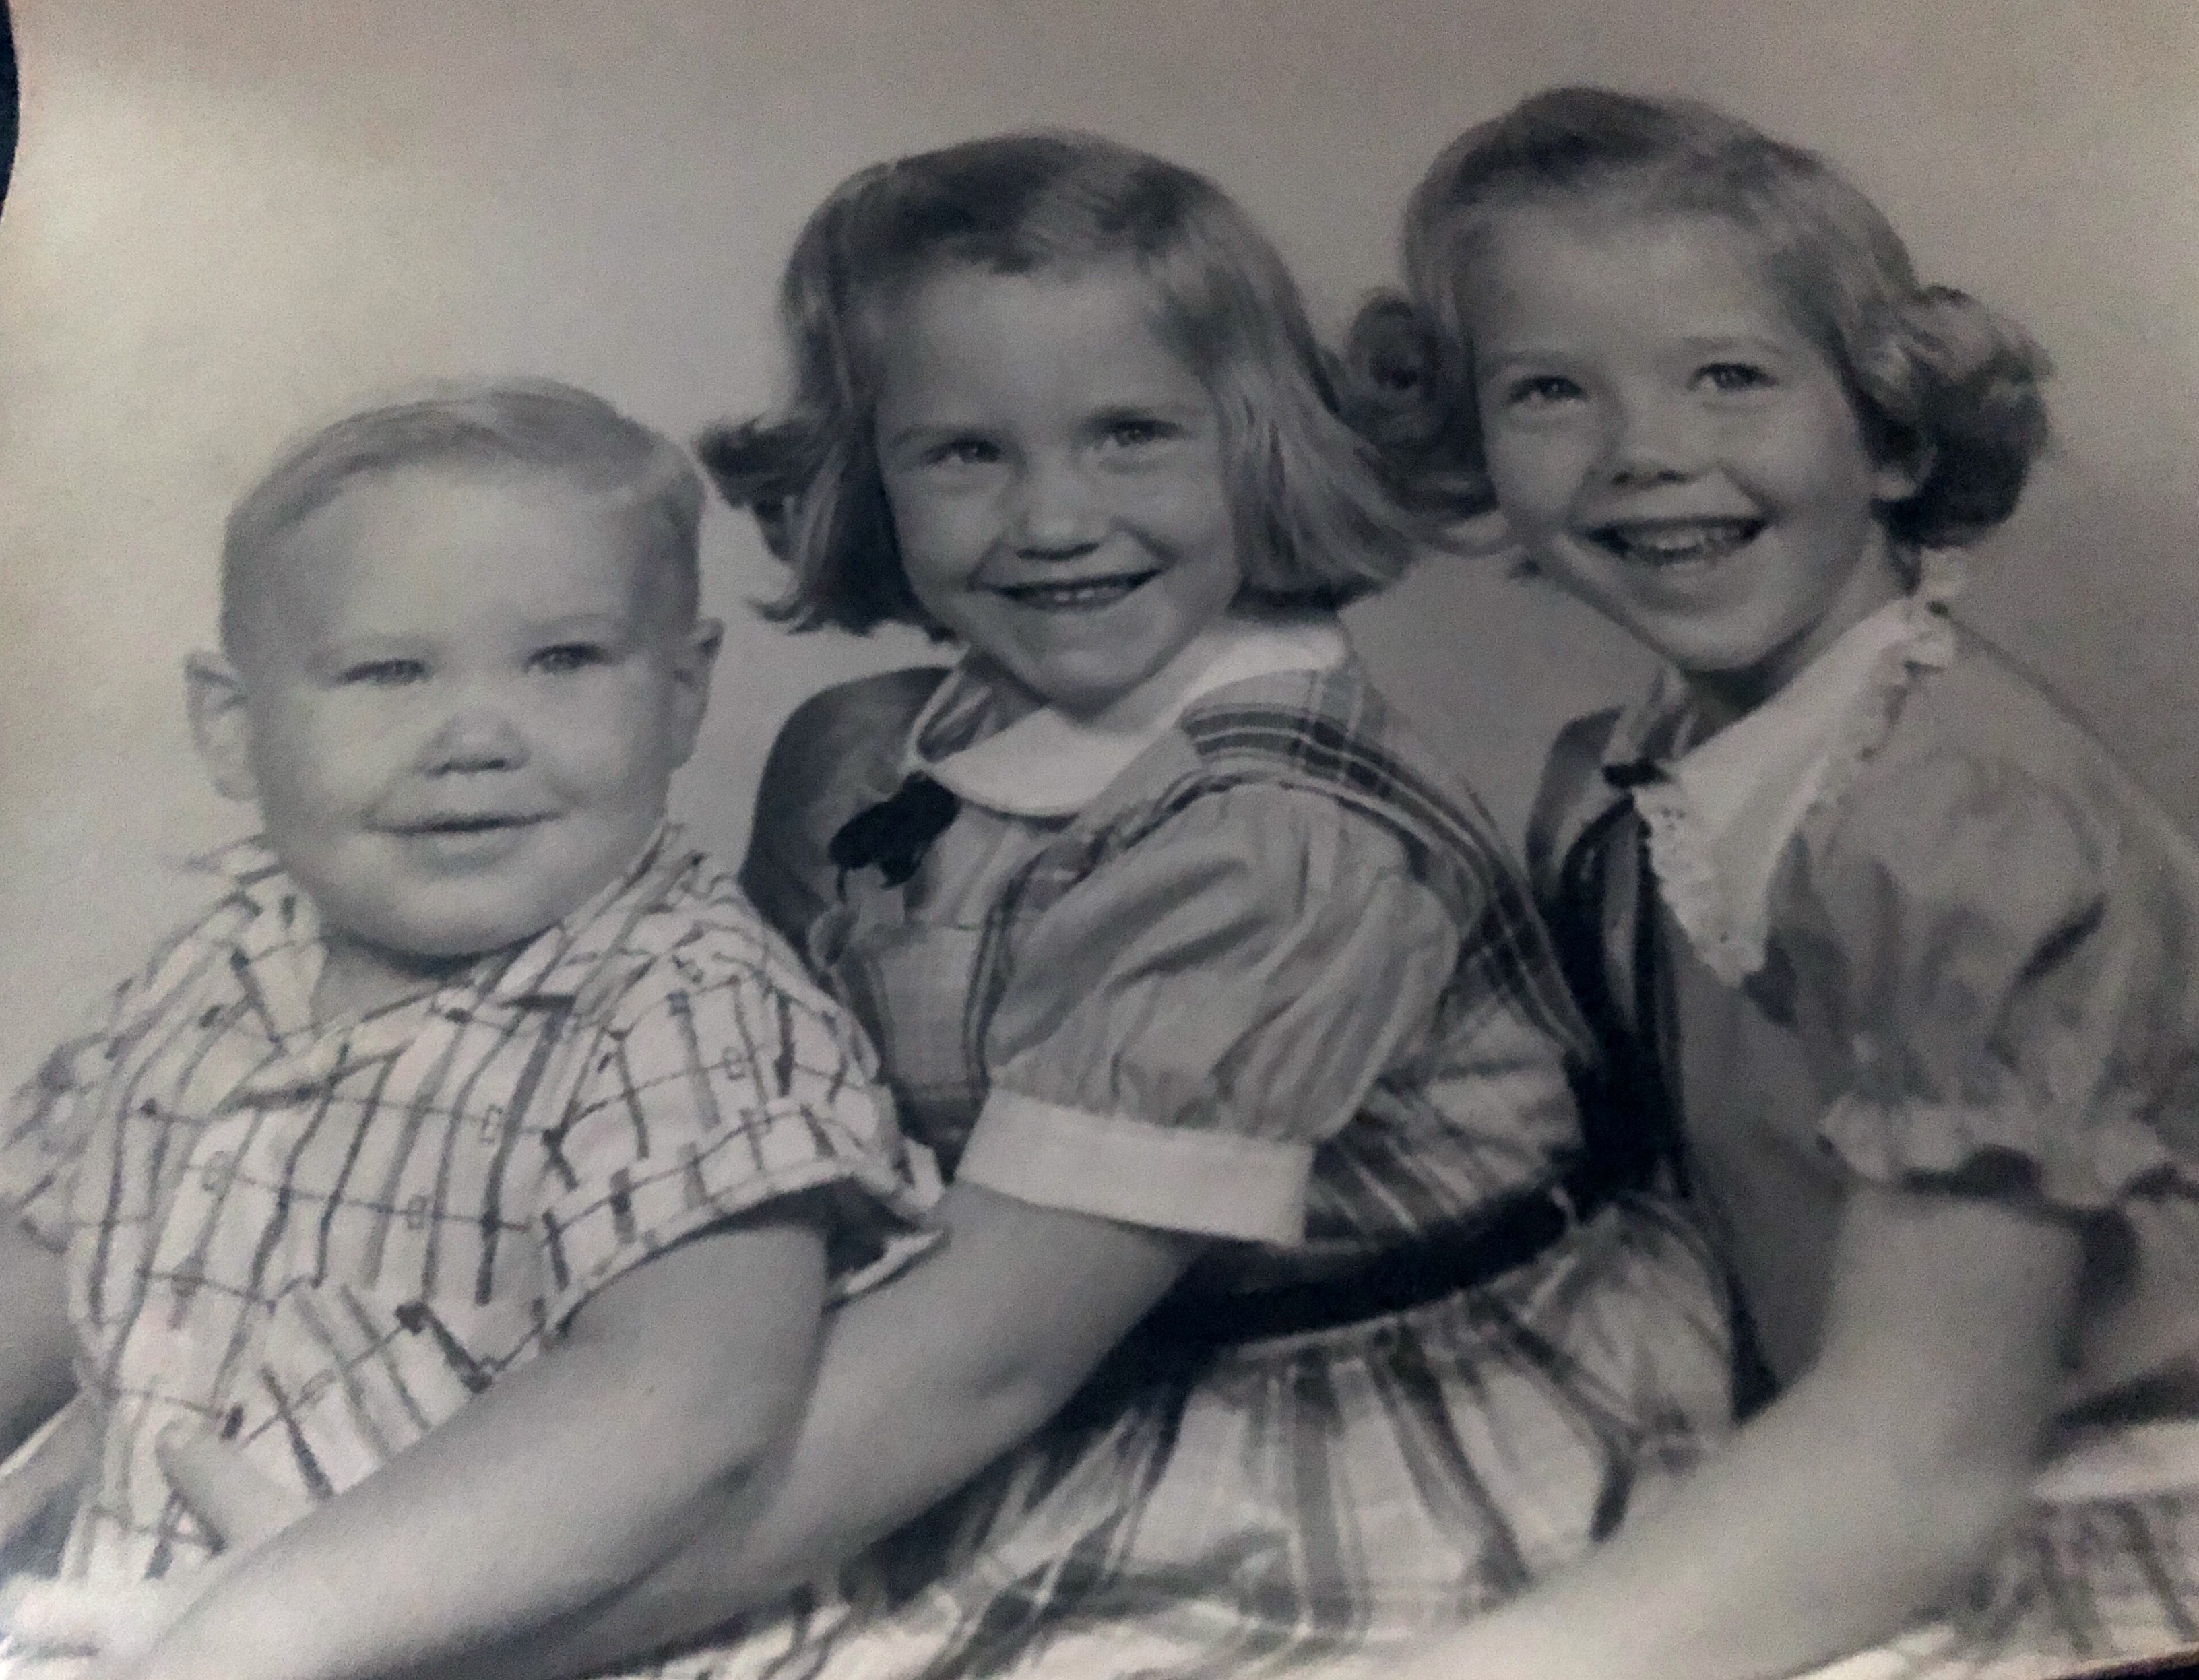 The siblings Afton circa 1955